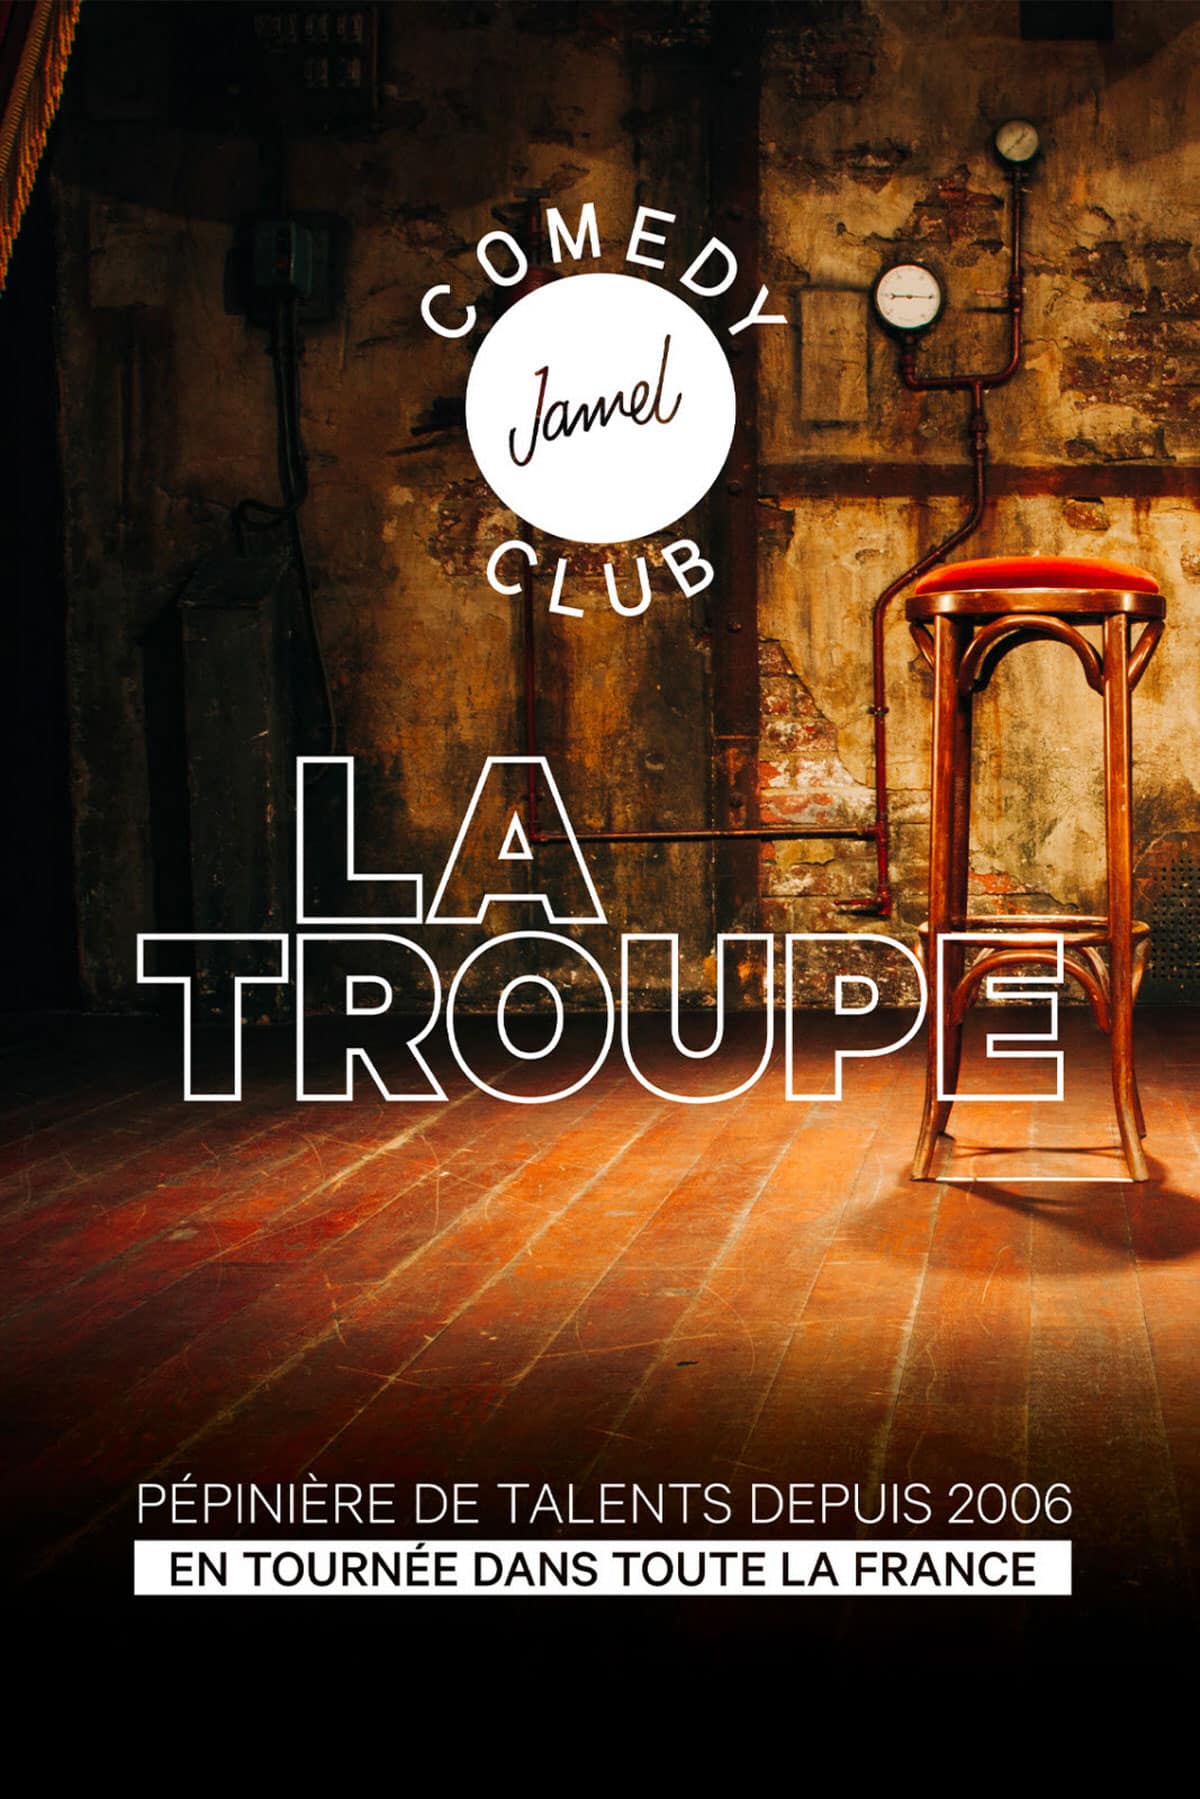 Lunel Ose Festival - Jamel Comedy Club – La troupe